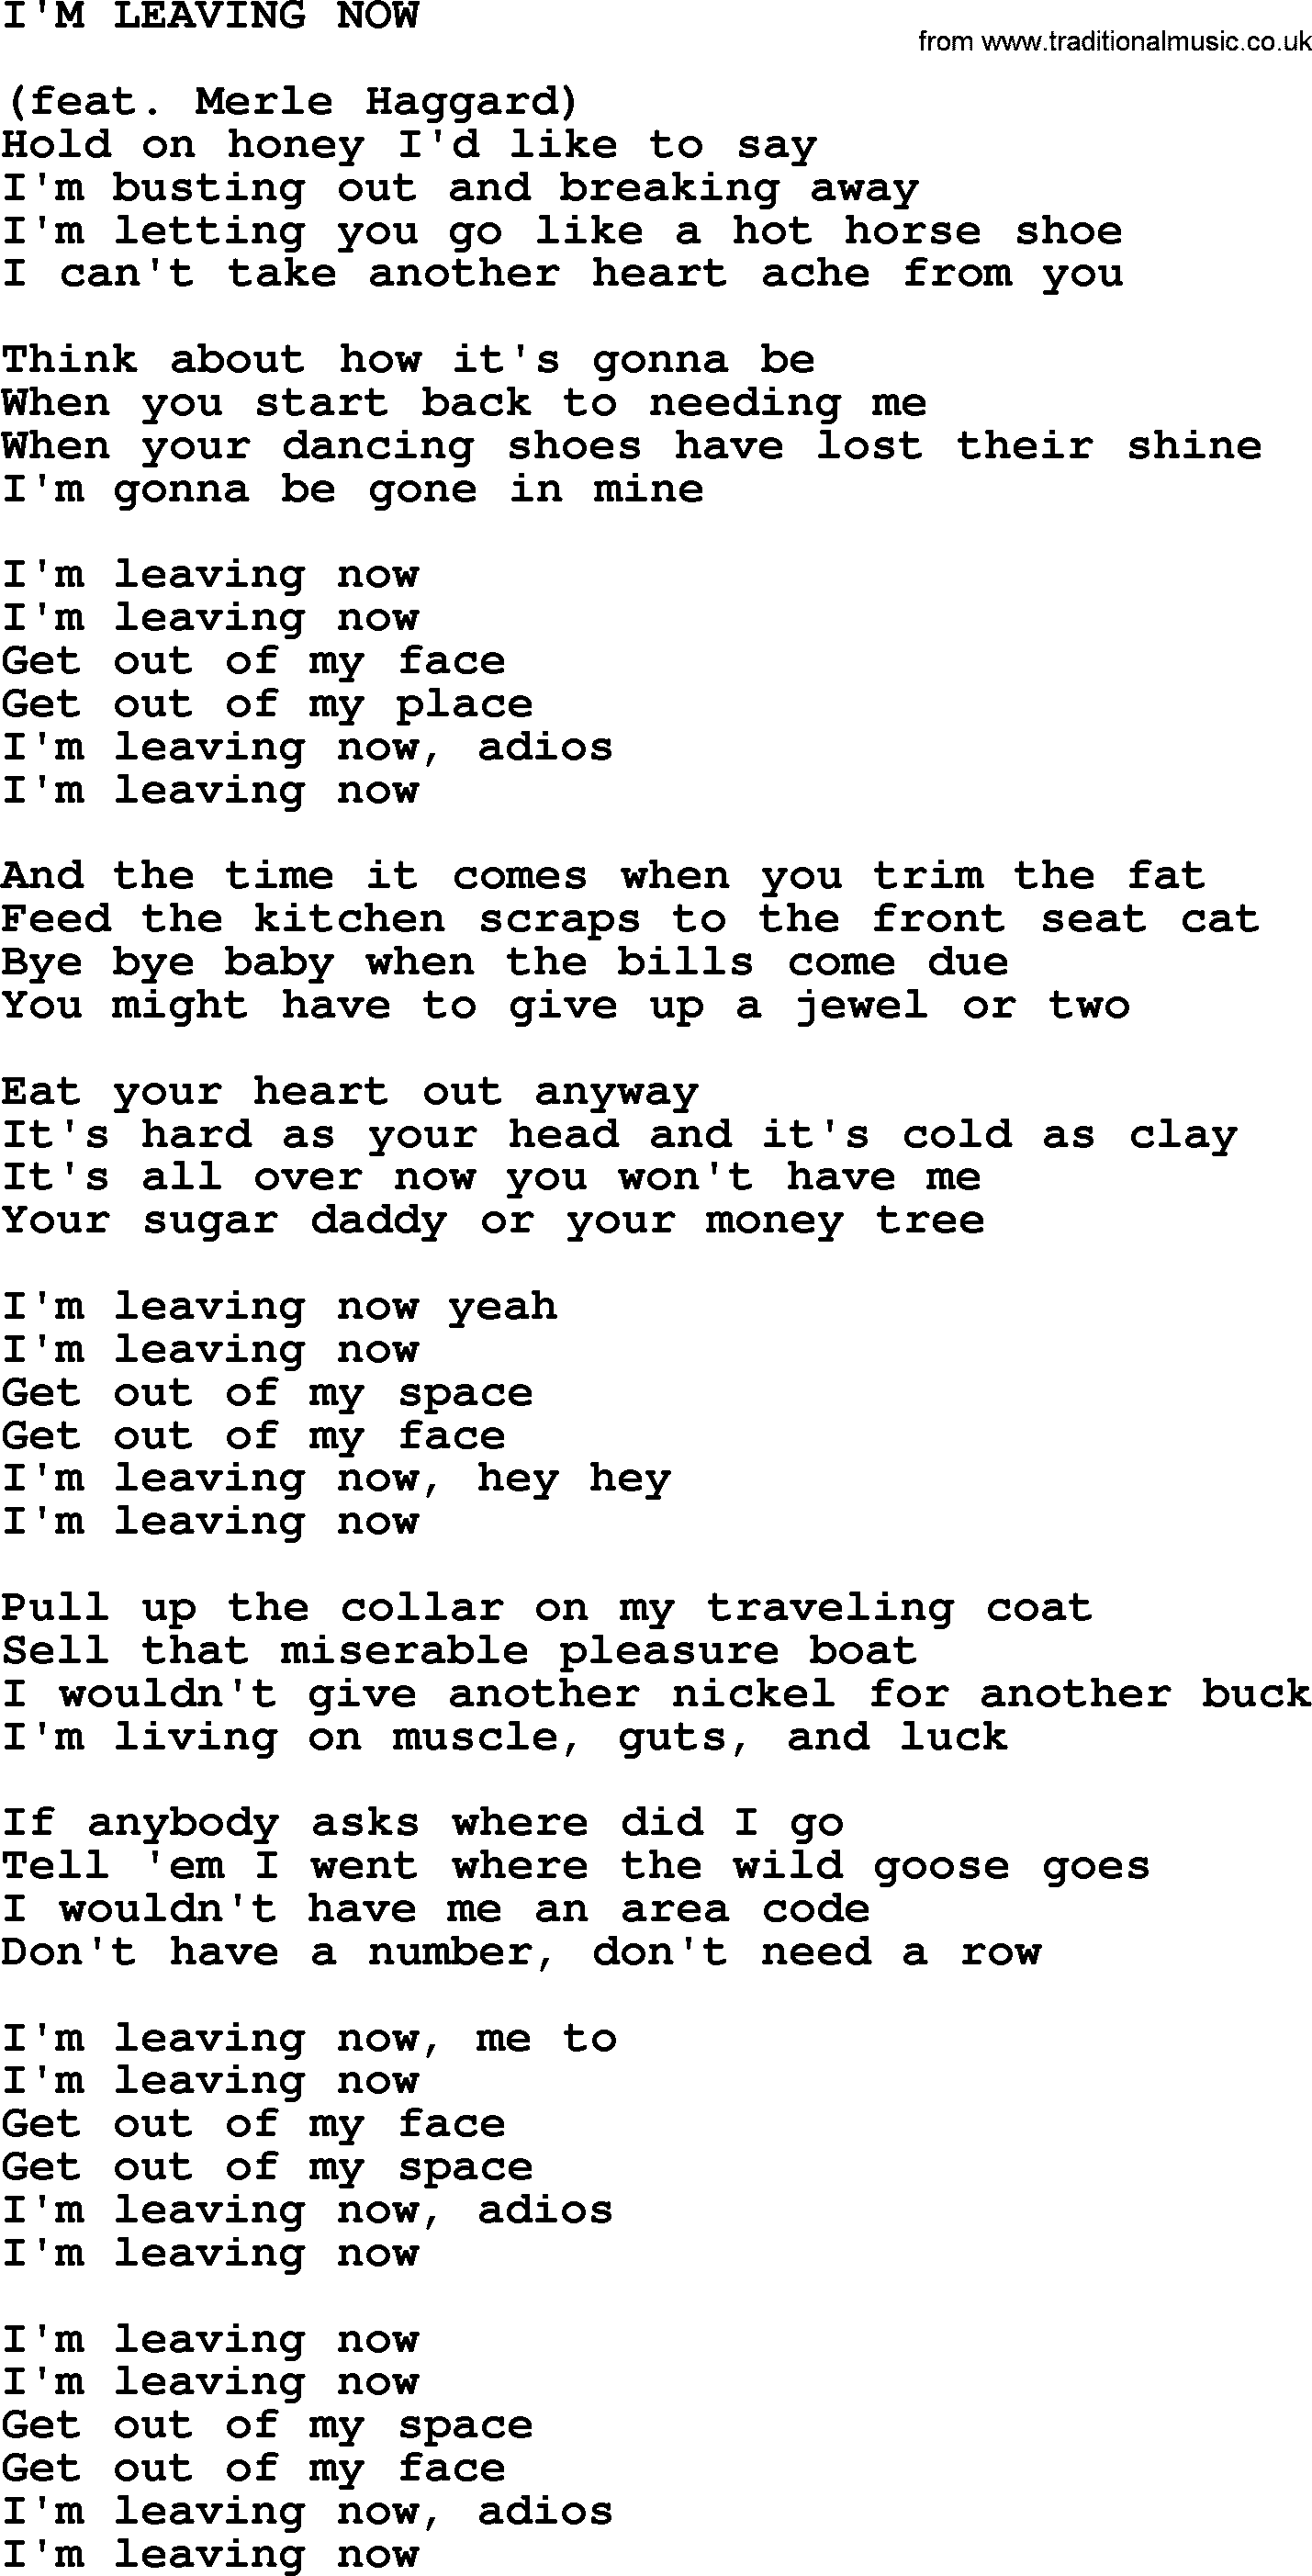 Johnny Cash song I'm Leaving Now.txt lyrics